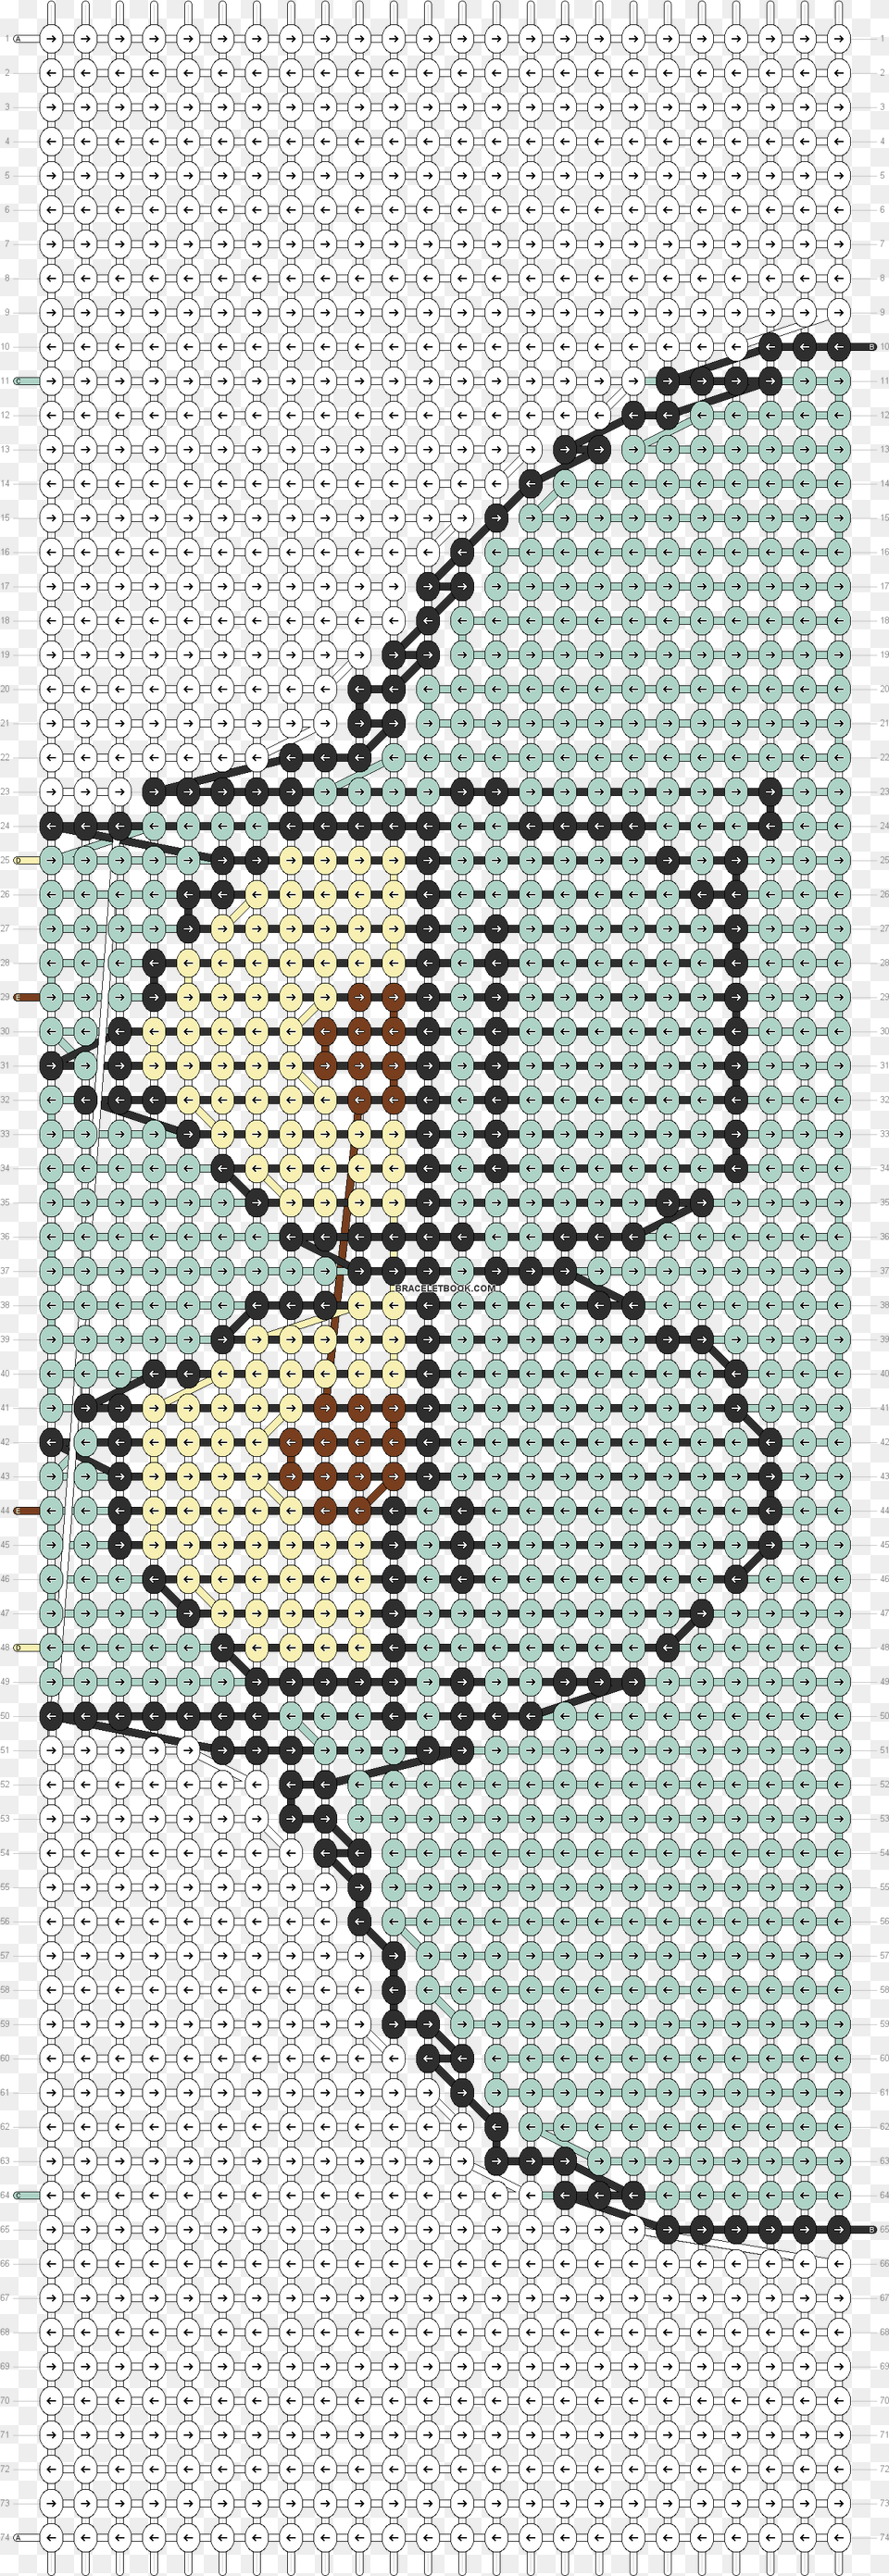 Alpha Pattern Squidward Friendship Bracelet Patterns, Home Decor, Oars, Person Png Image